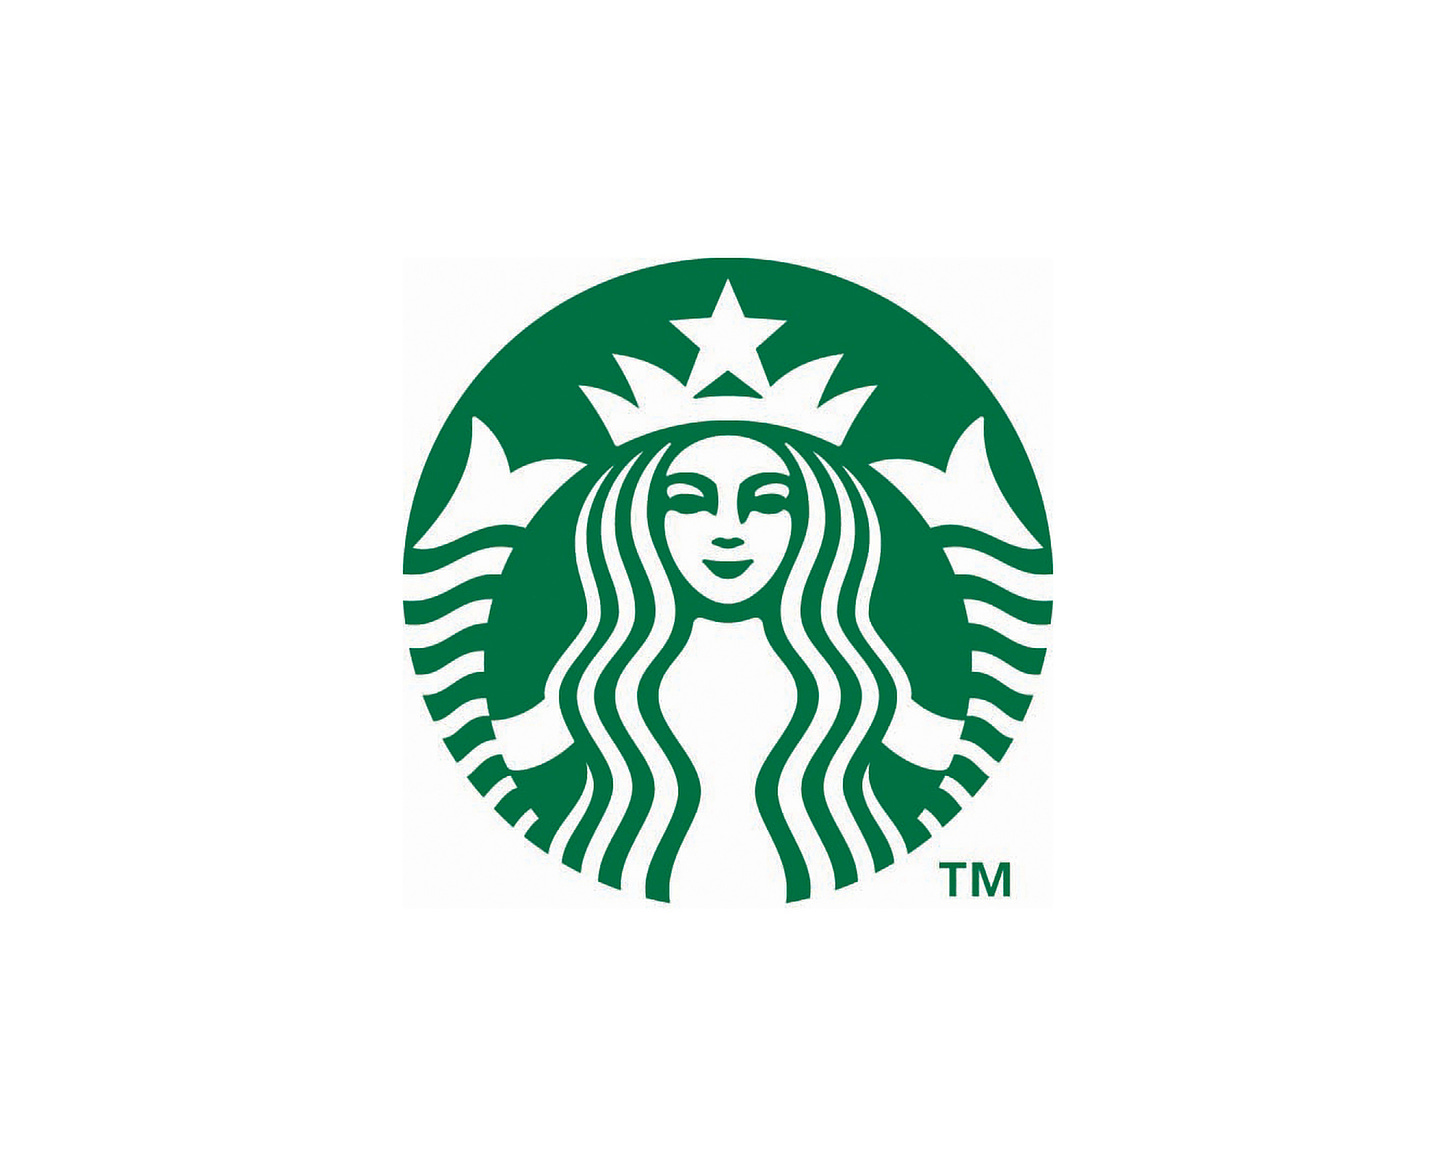 Starbucks Stories - Stories to inspire and nurture the human spirit